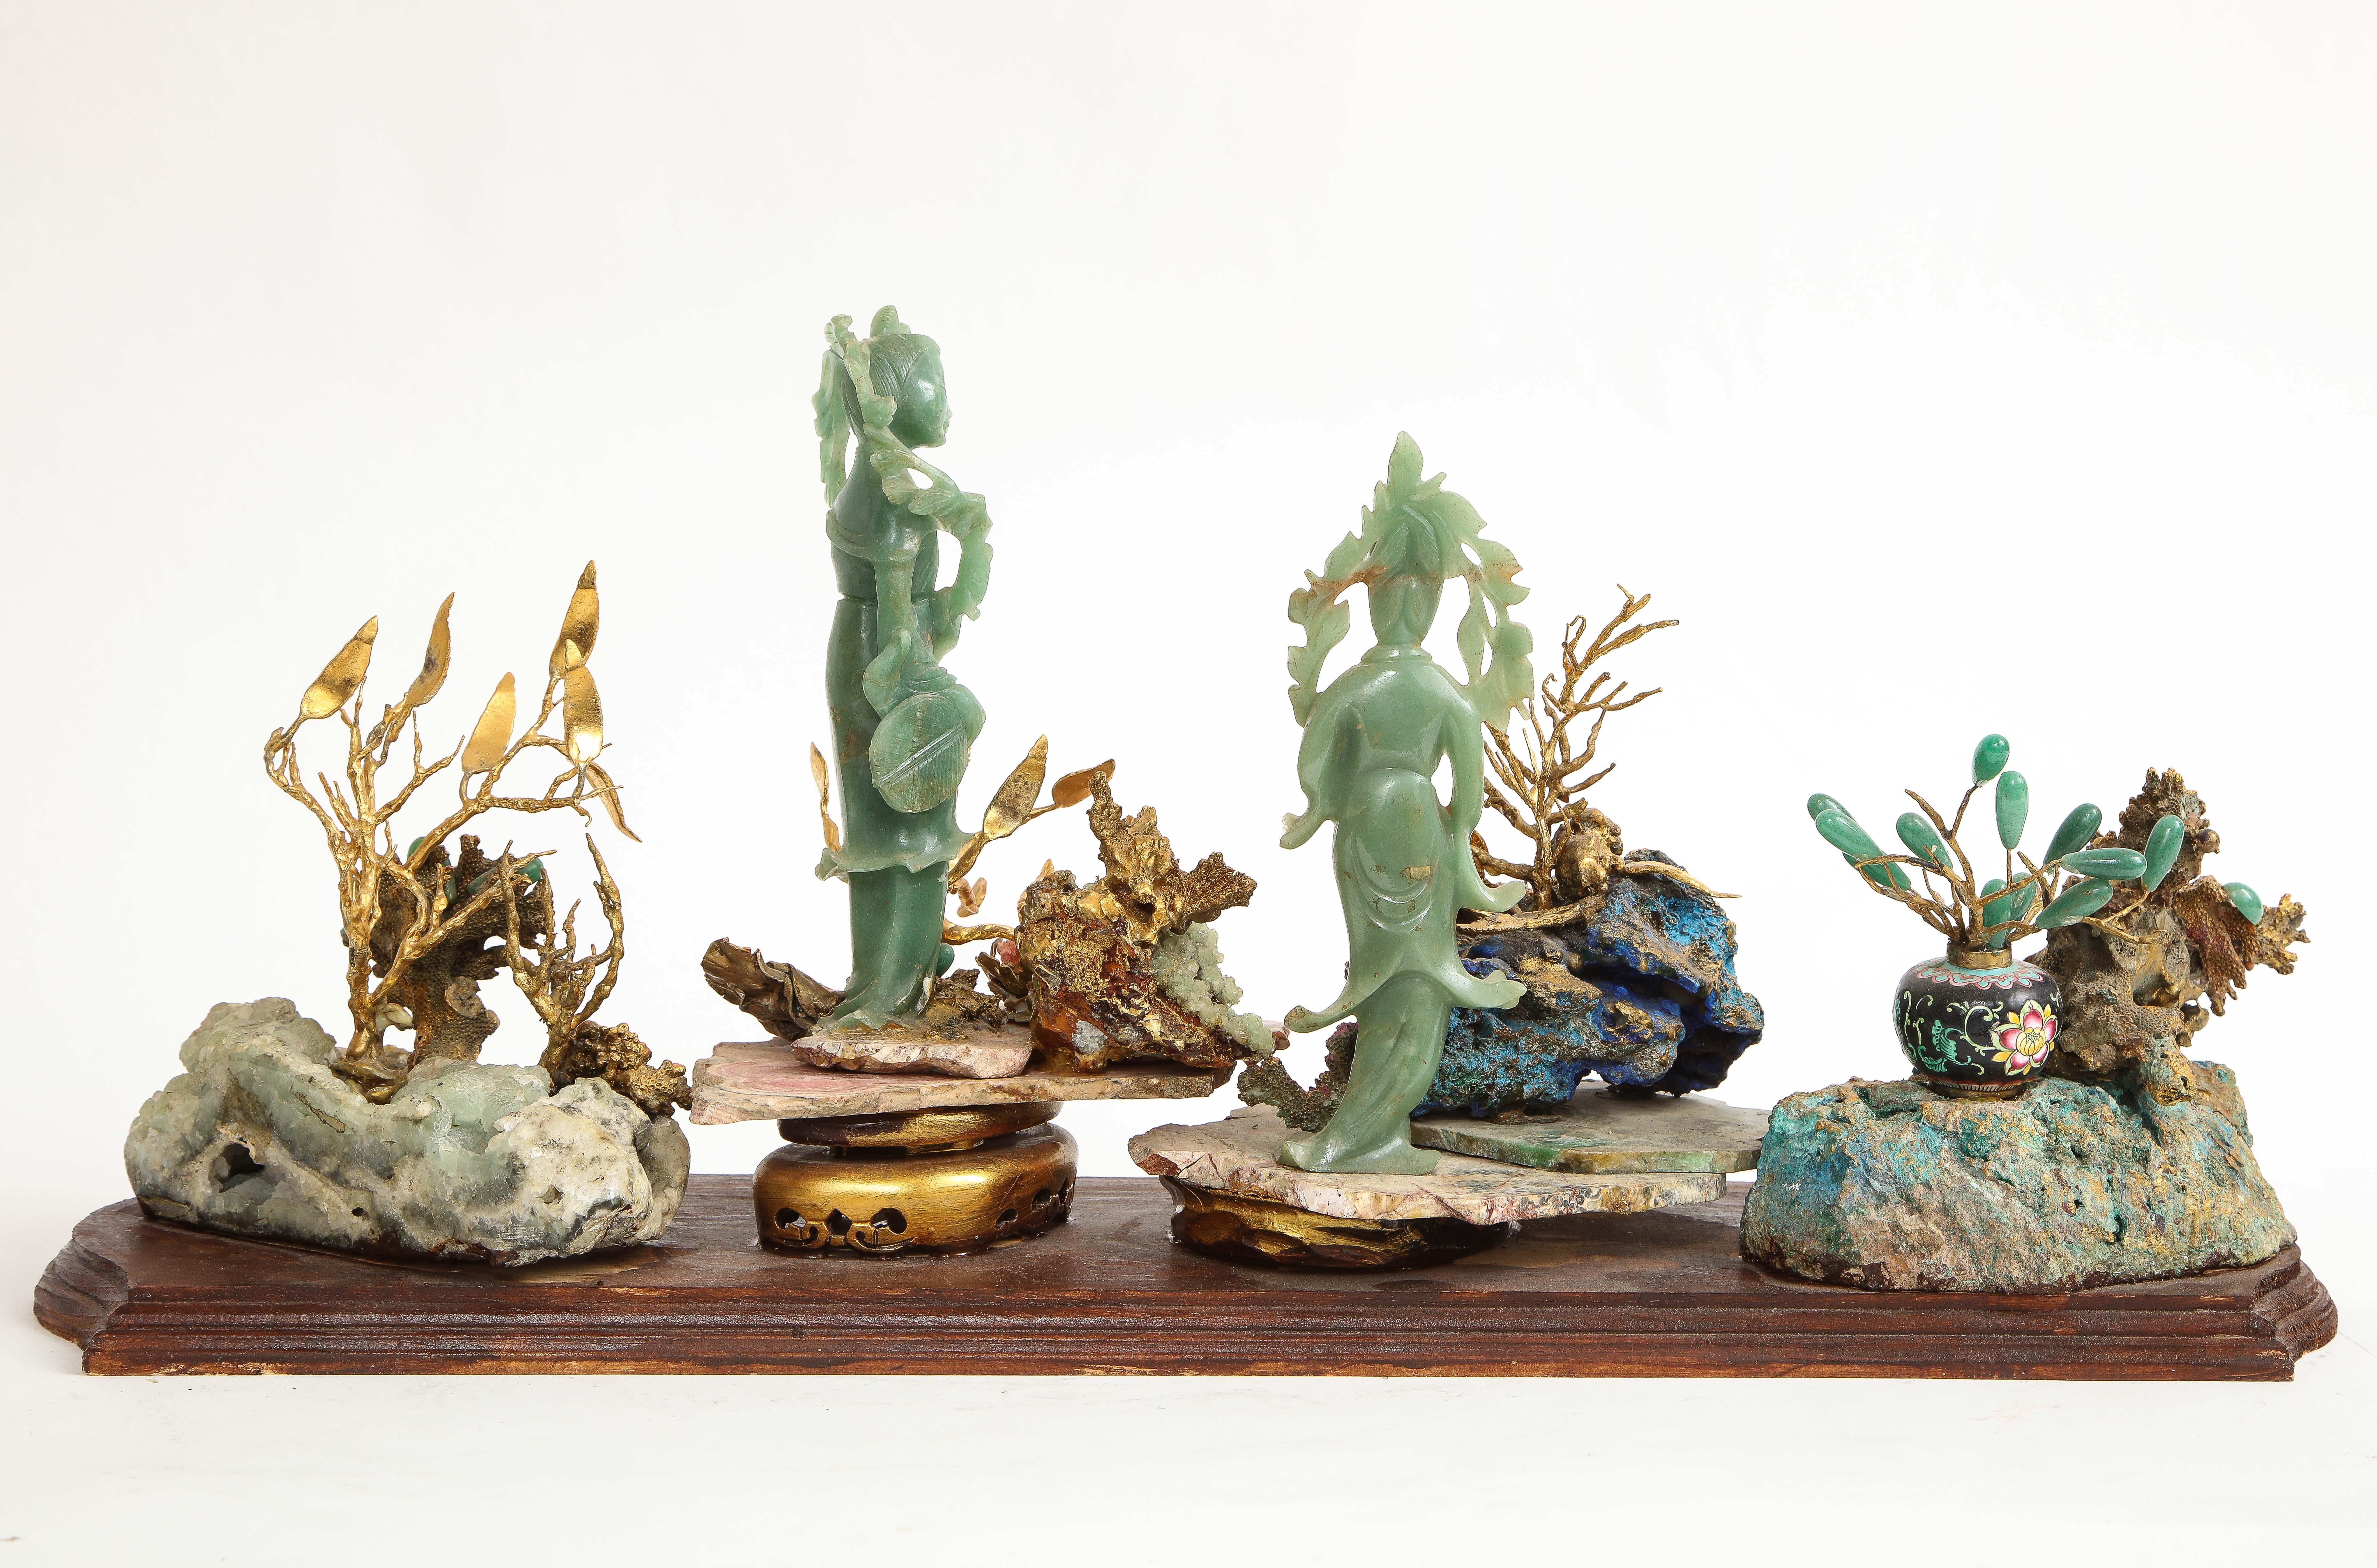 20th Century Chinese Jade, Cloisonné, & Gilt Metal Desk Accessory/Sculpture For Sale 3